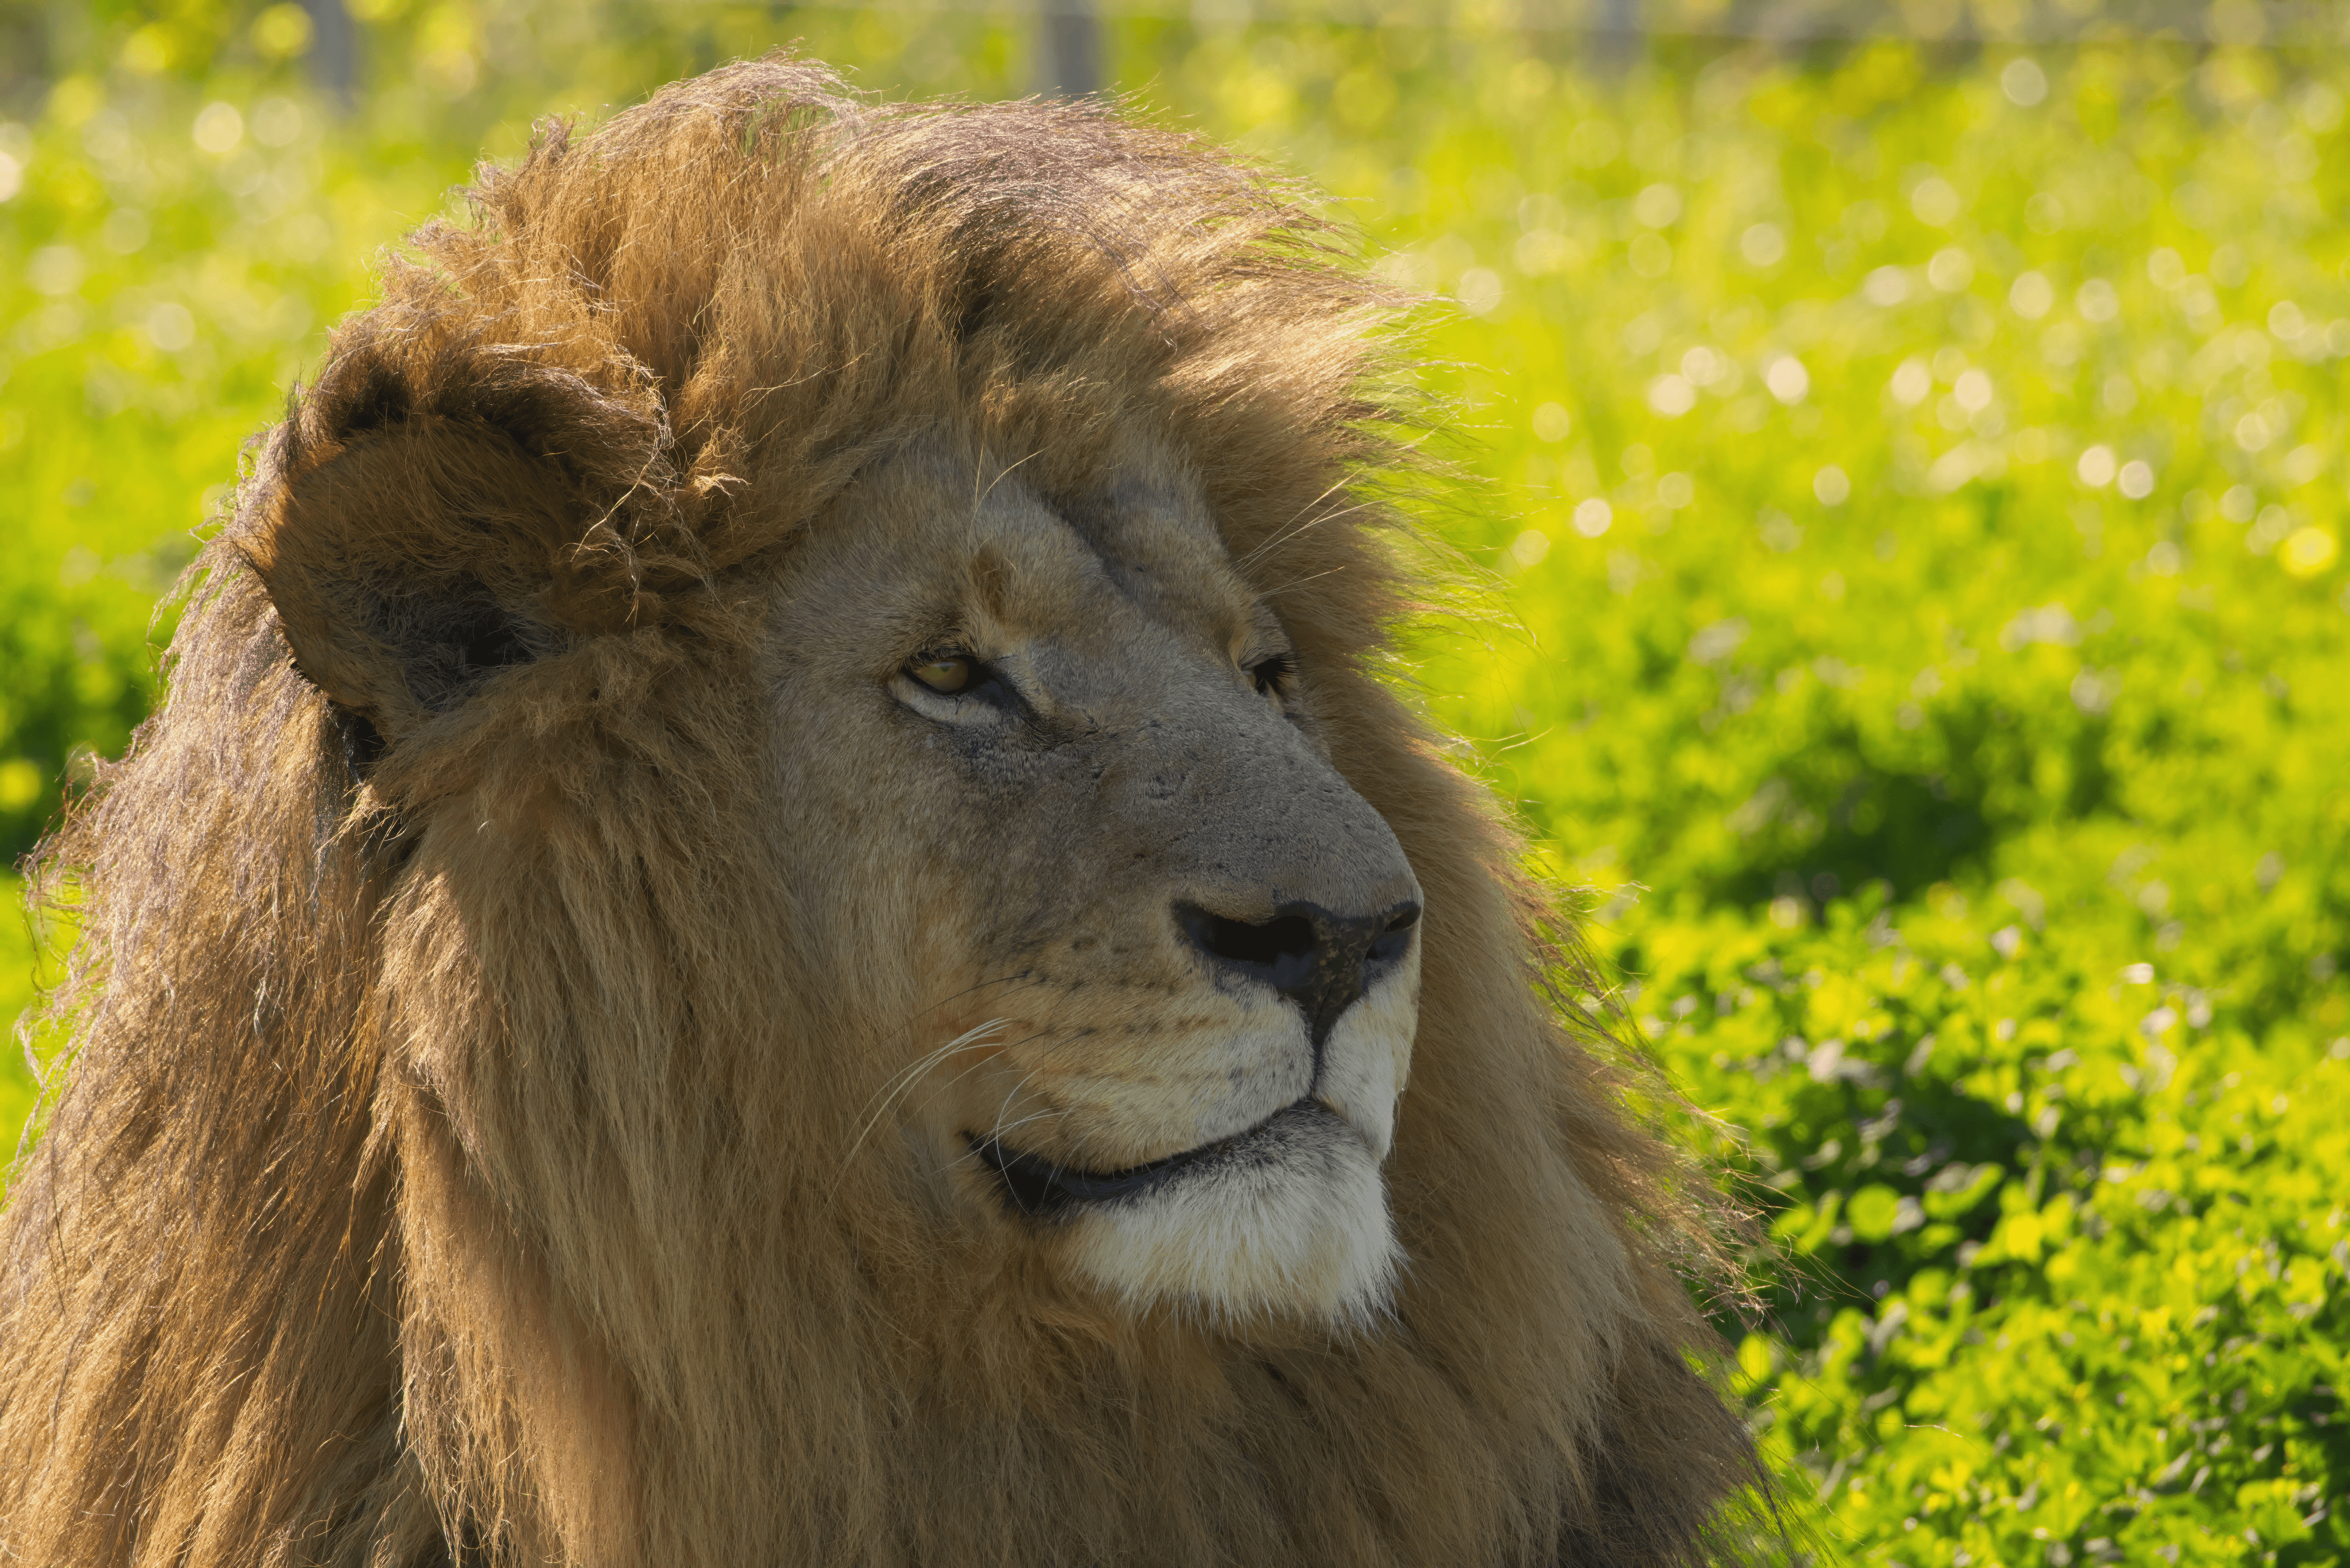 Majestic Reverie: Lion's Gaze into Eternity